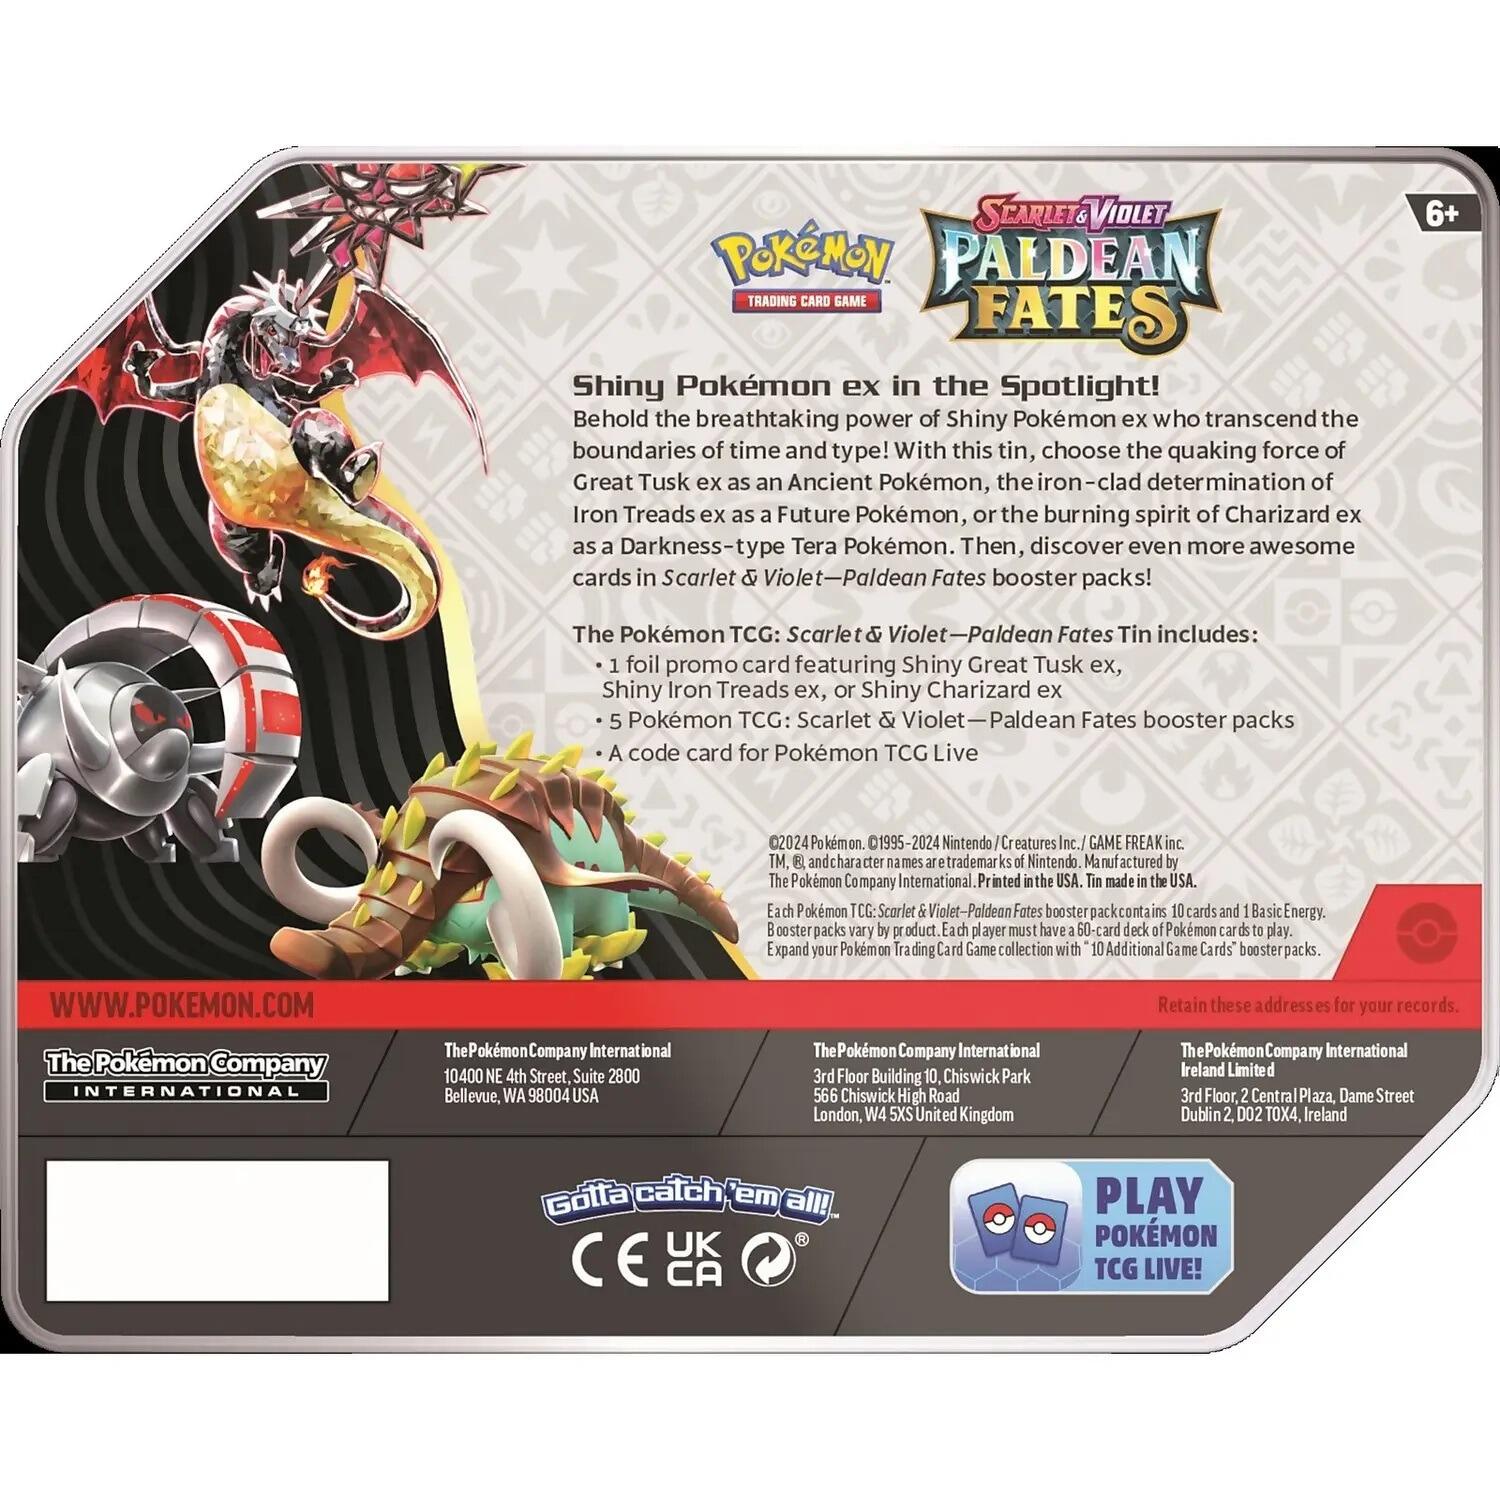 Pokémon TCG Scarlet & Violet 4.5 Paldean Fates (5 Booster) Tin - Great Tusk/Iron Treads/Charizard